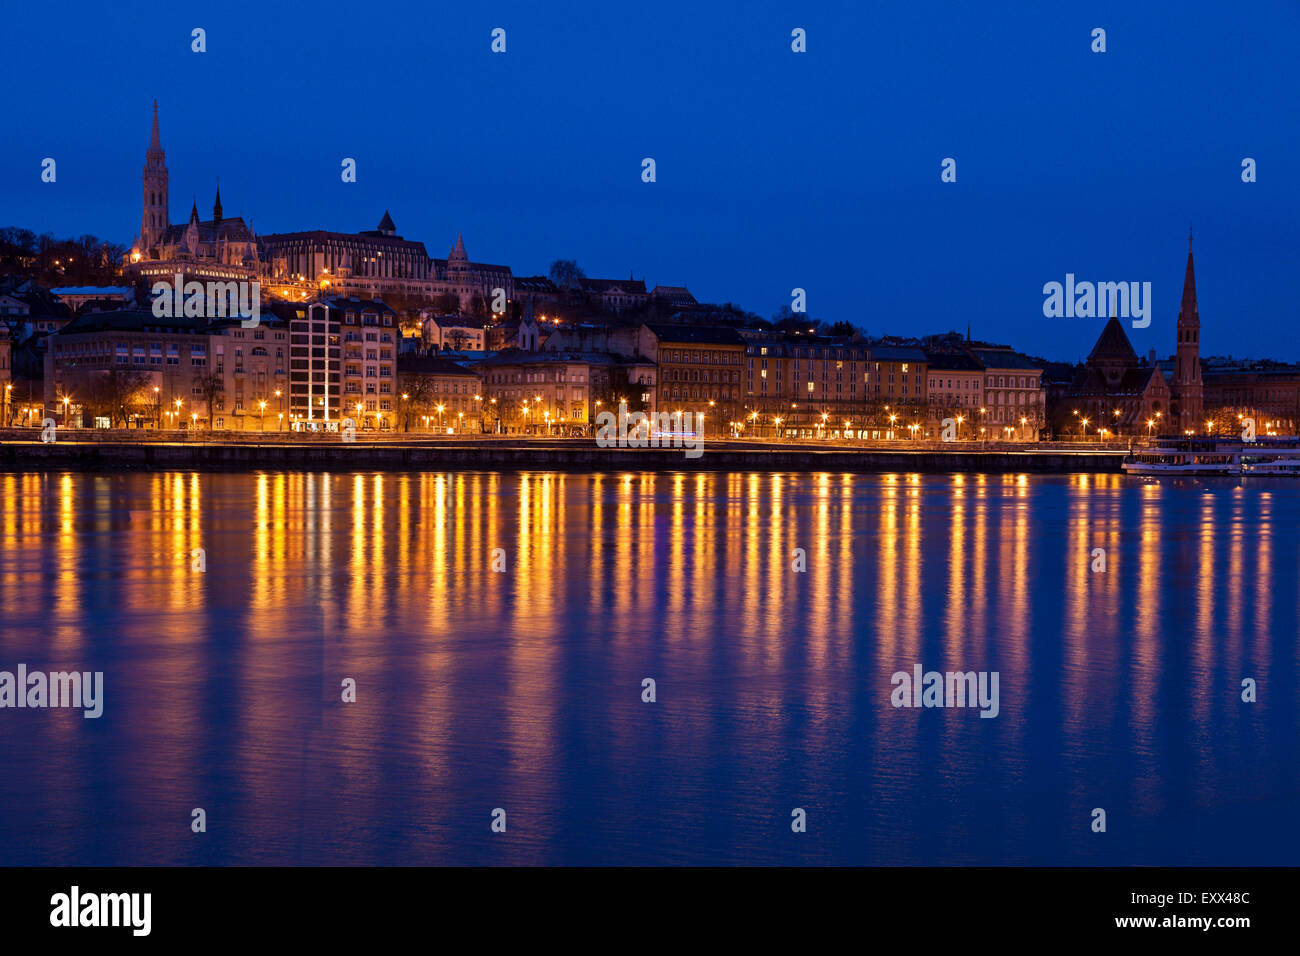 Illuminated skyline reflecting in Danube River Stock Photo